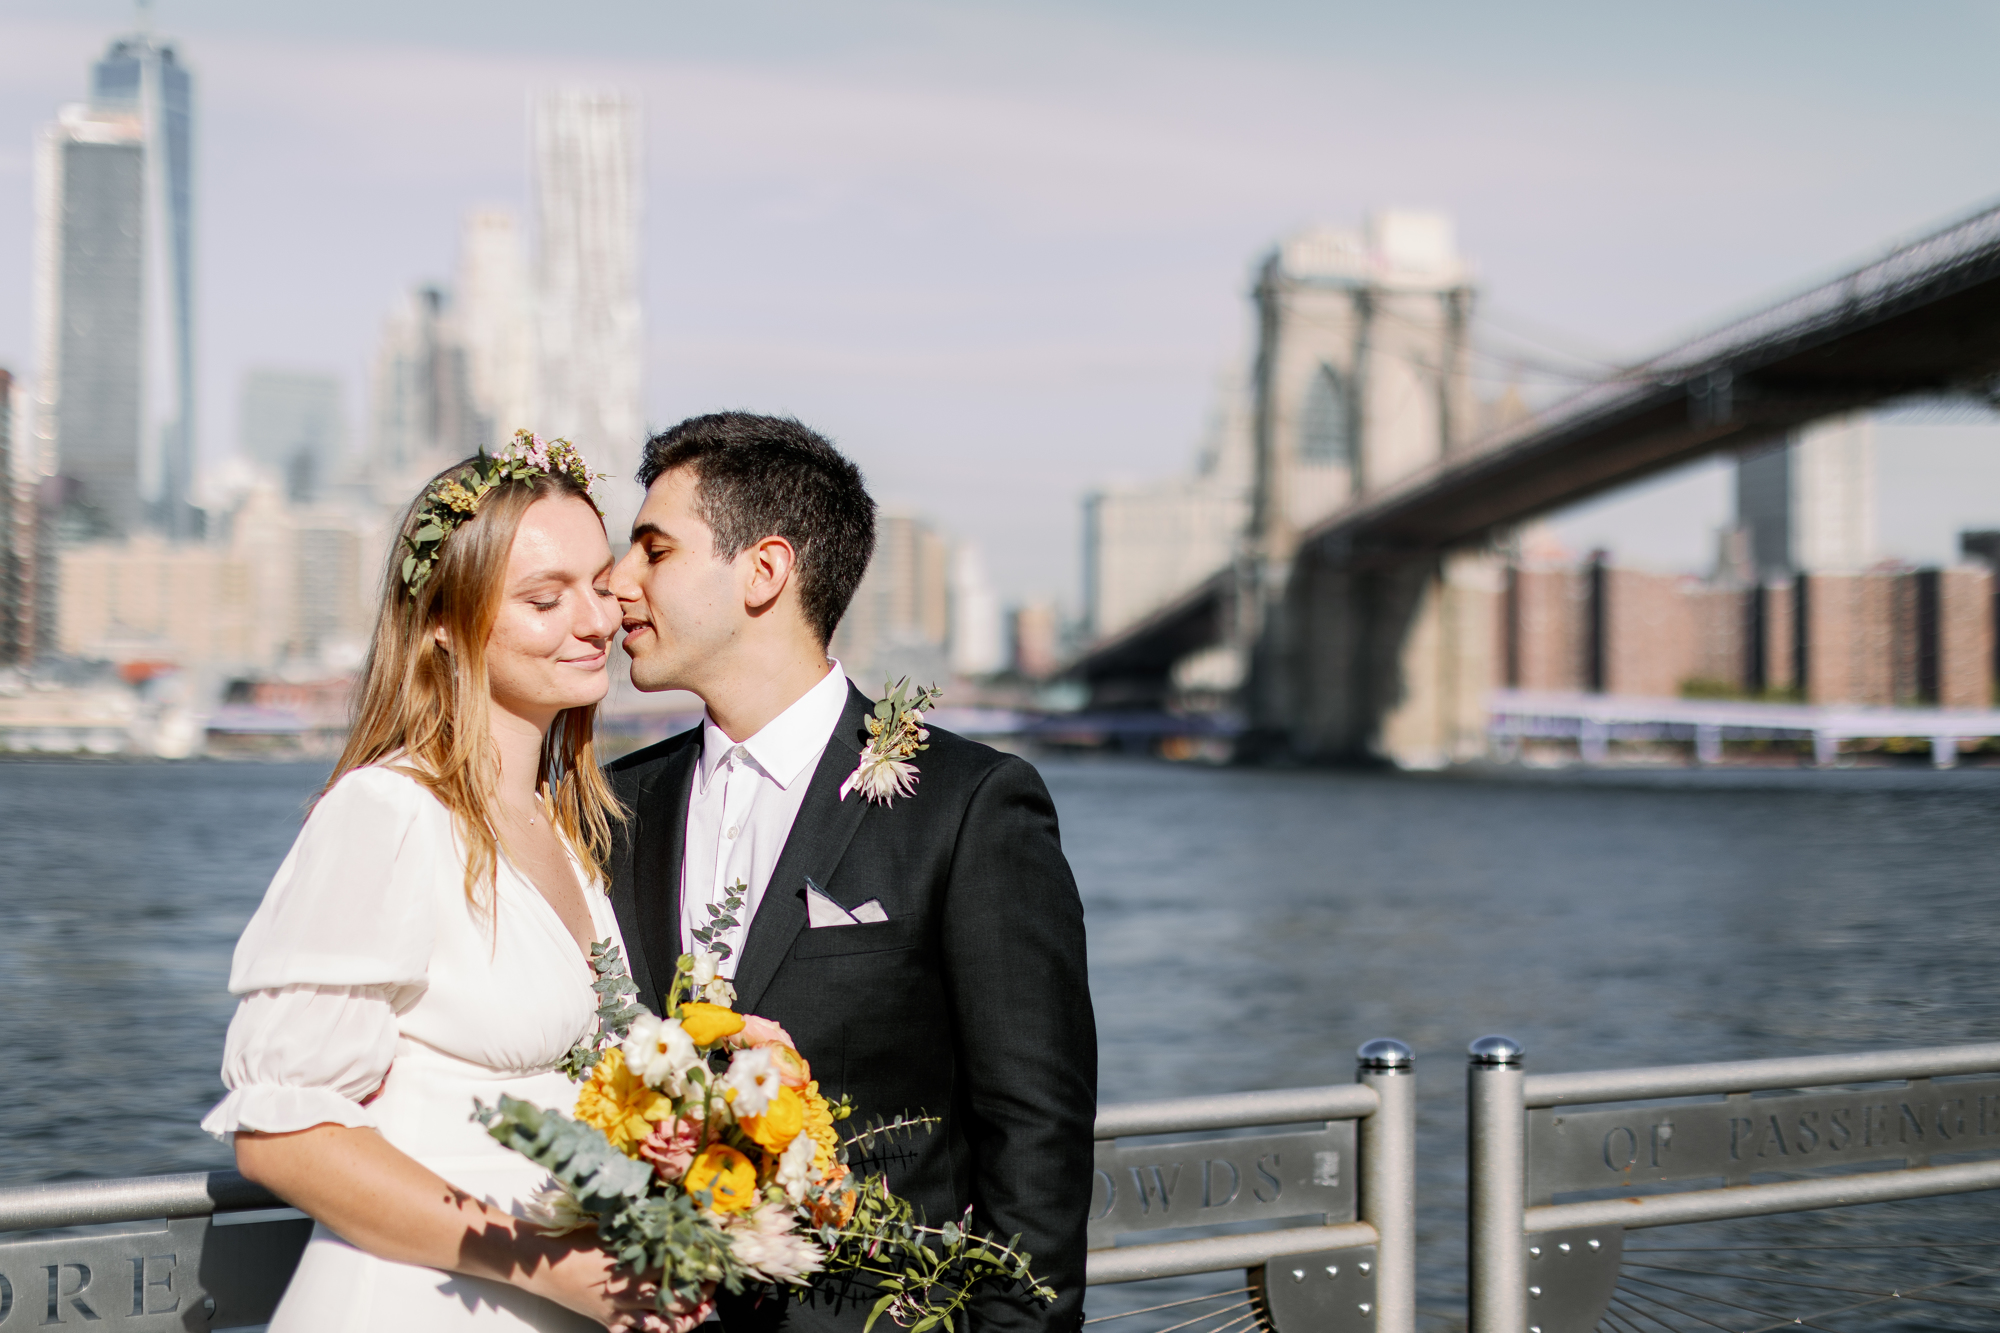 Romantic elopement photos in Brooklyn Bridge Park